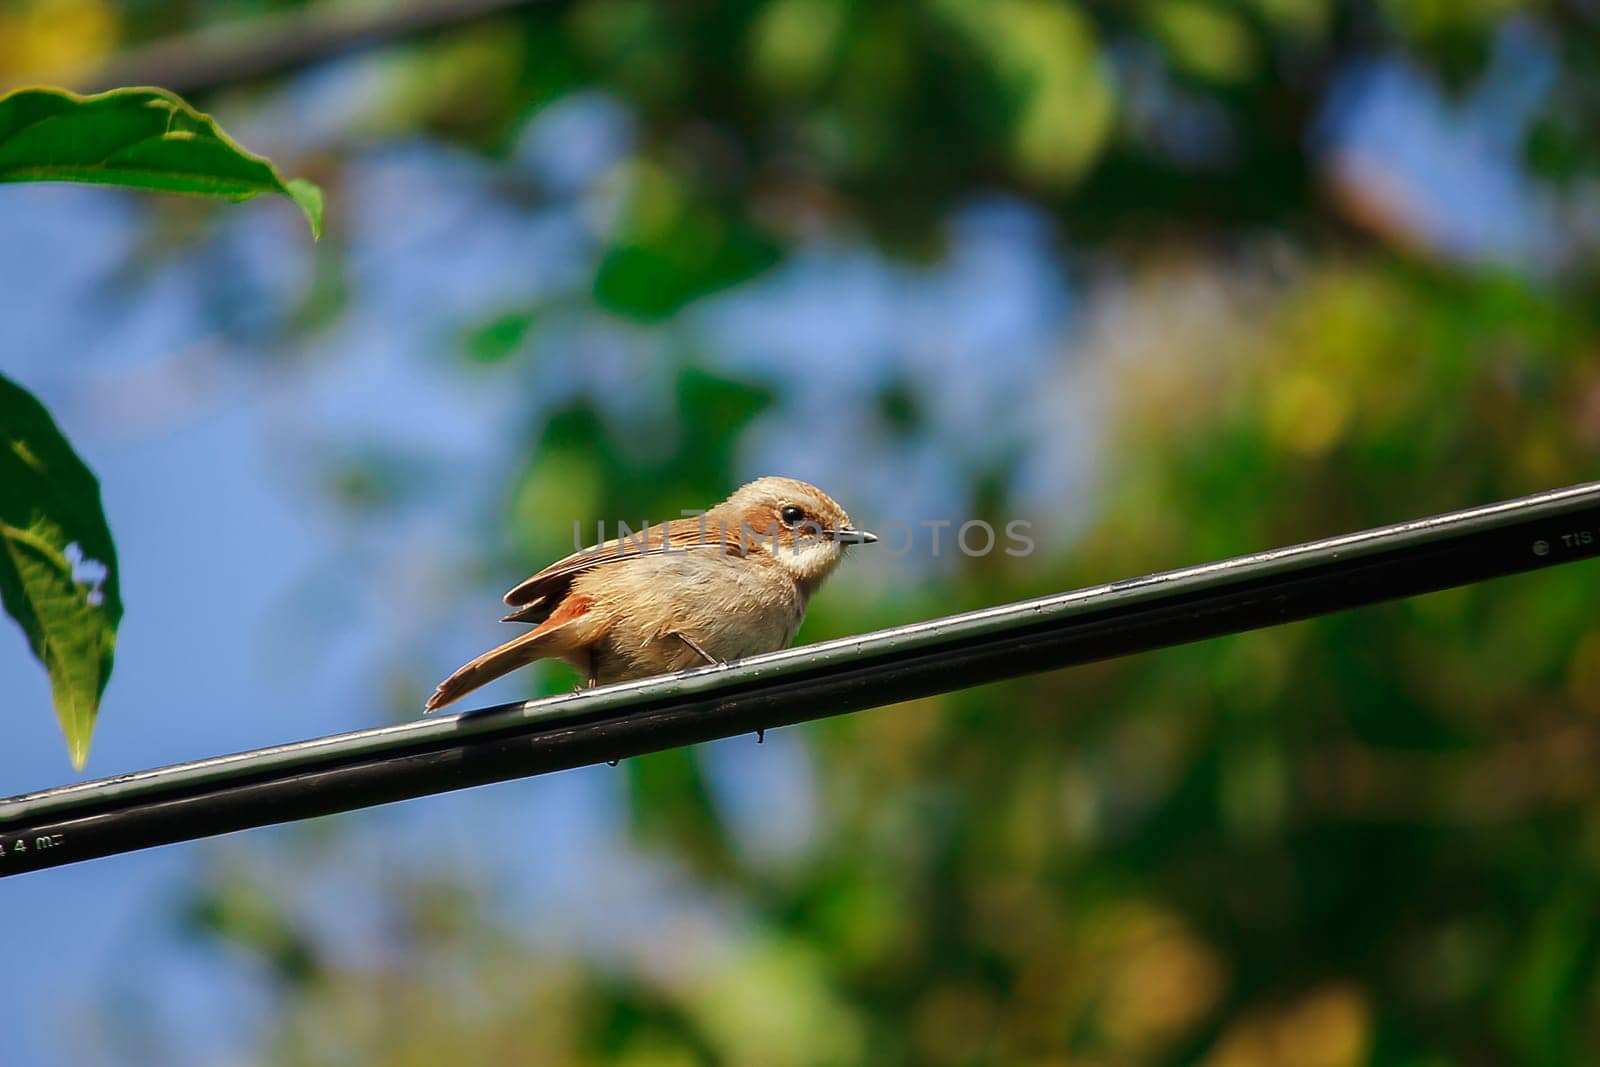 fulvetta (bird) on the power cord In Doi Inthanon National Park, Thailand